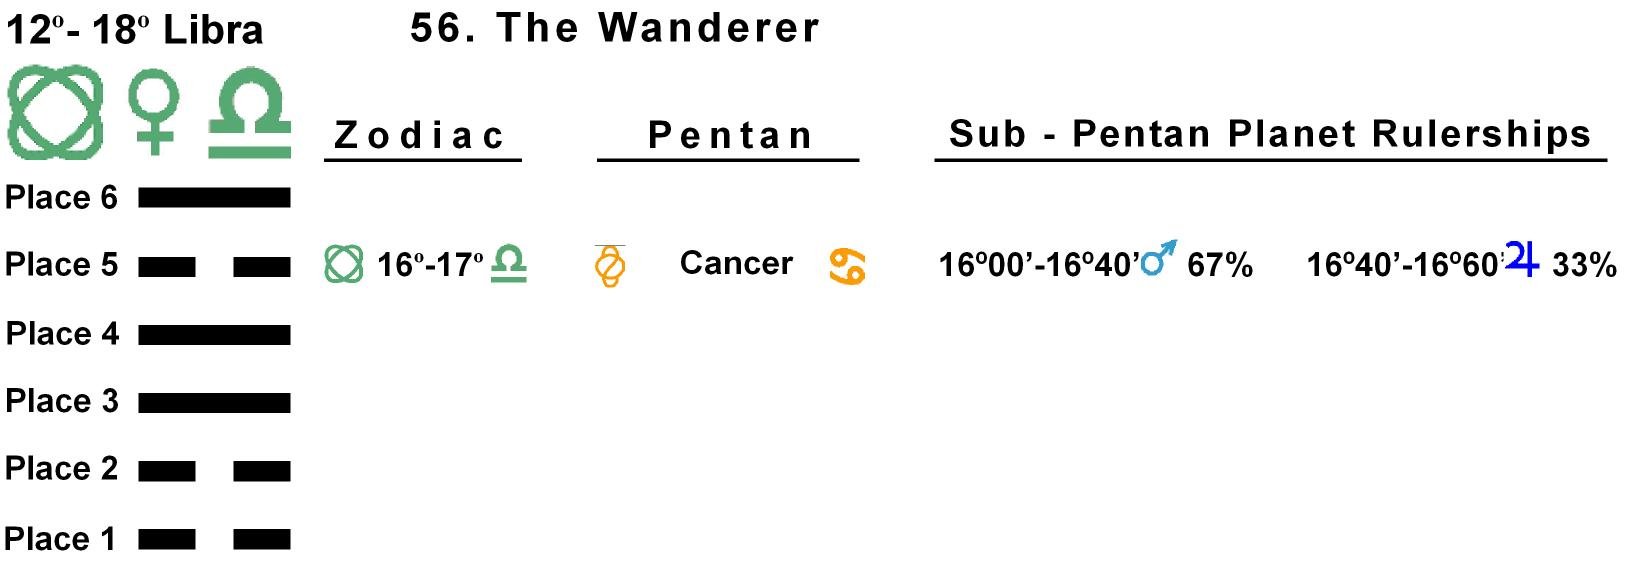 Pent-lines-07LI 16-17 Hx-56 The Wanderer